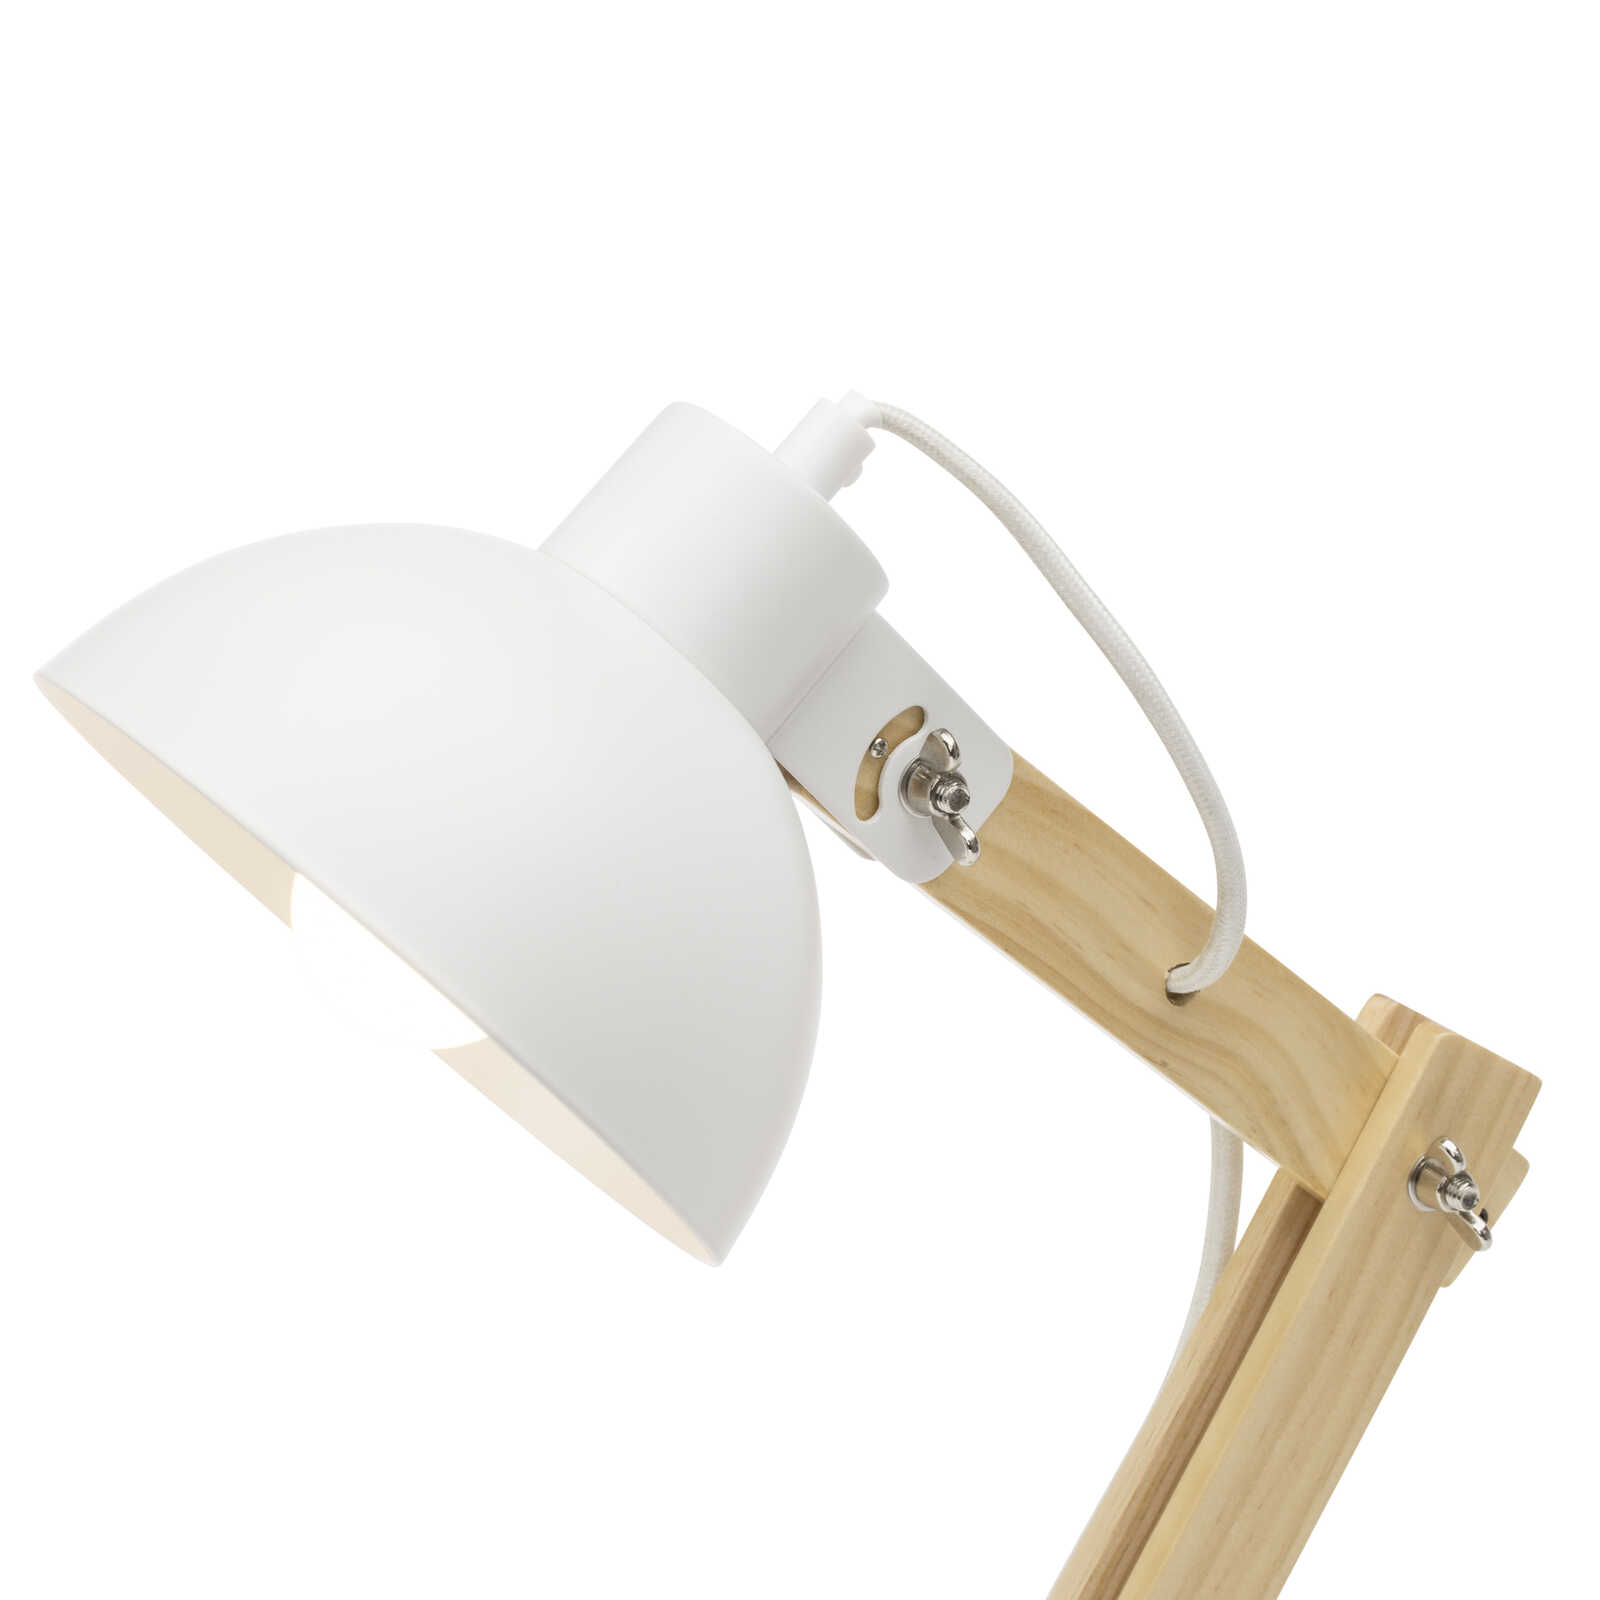             Lampe de table en bois - Lisa 1 - Blanc
        